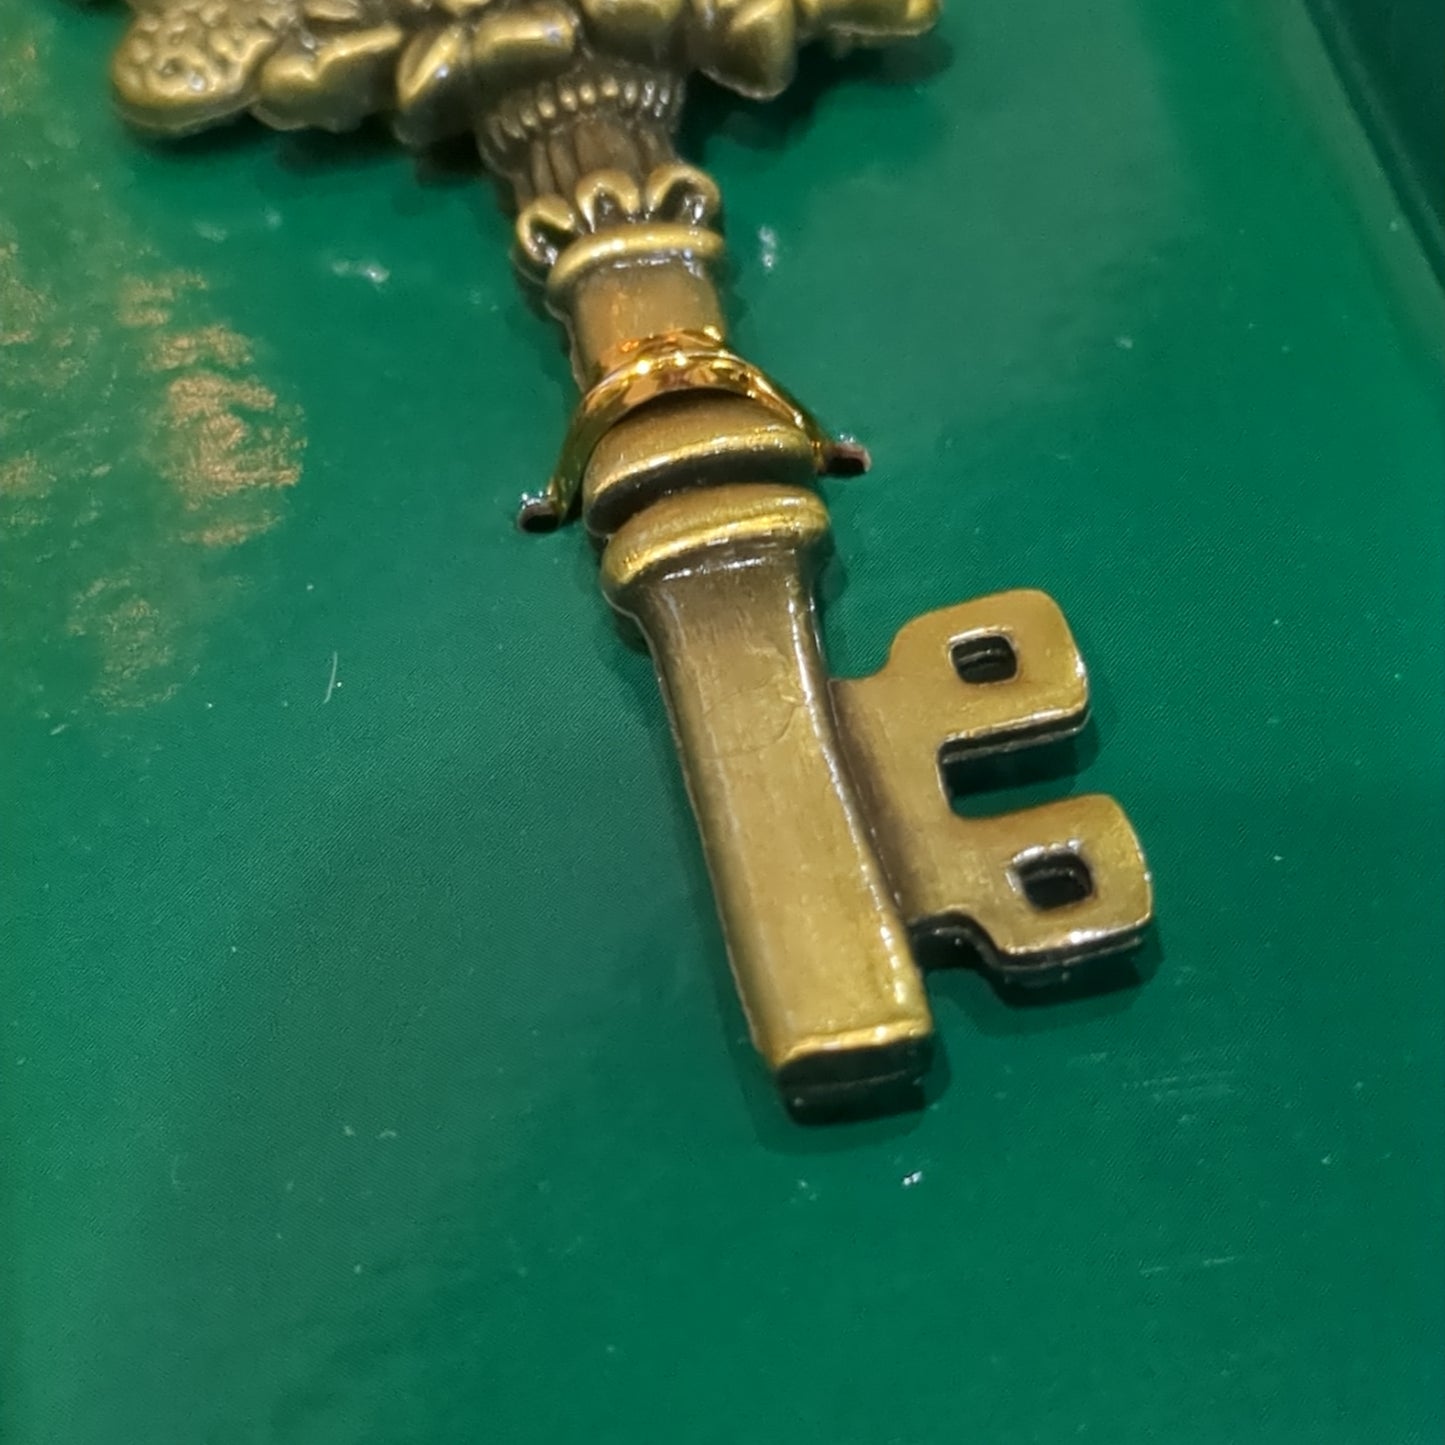 A key for Santa.  Metal key